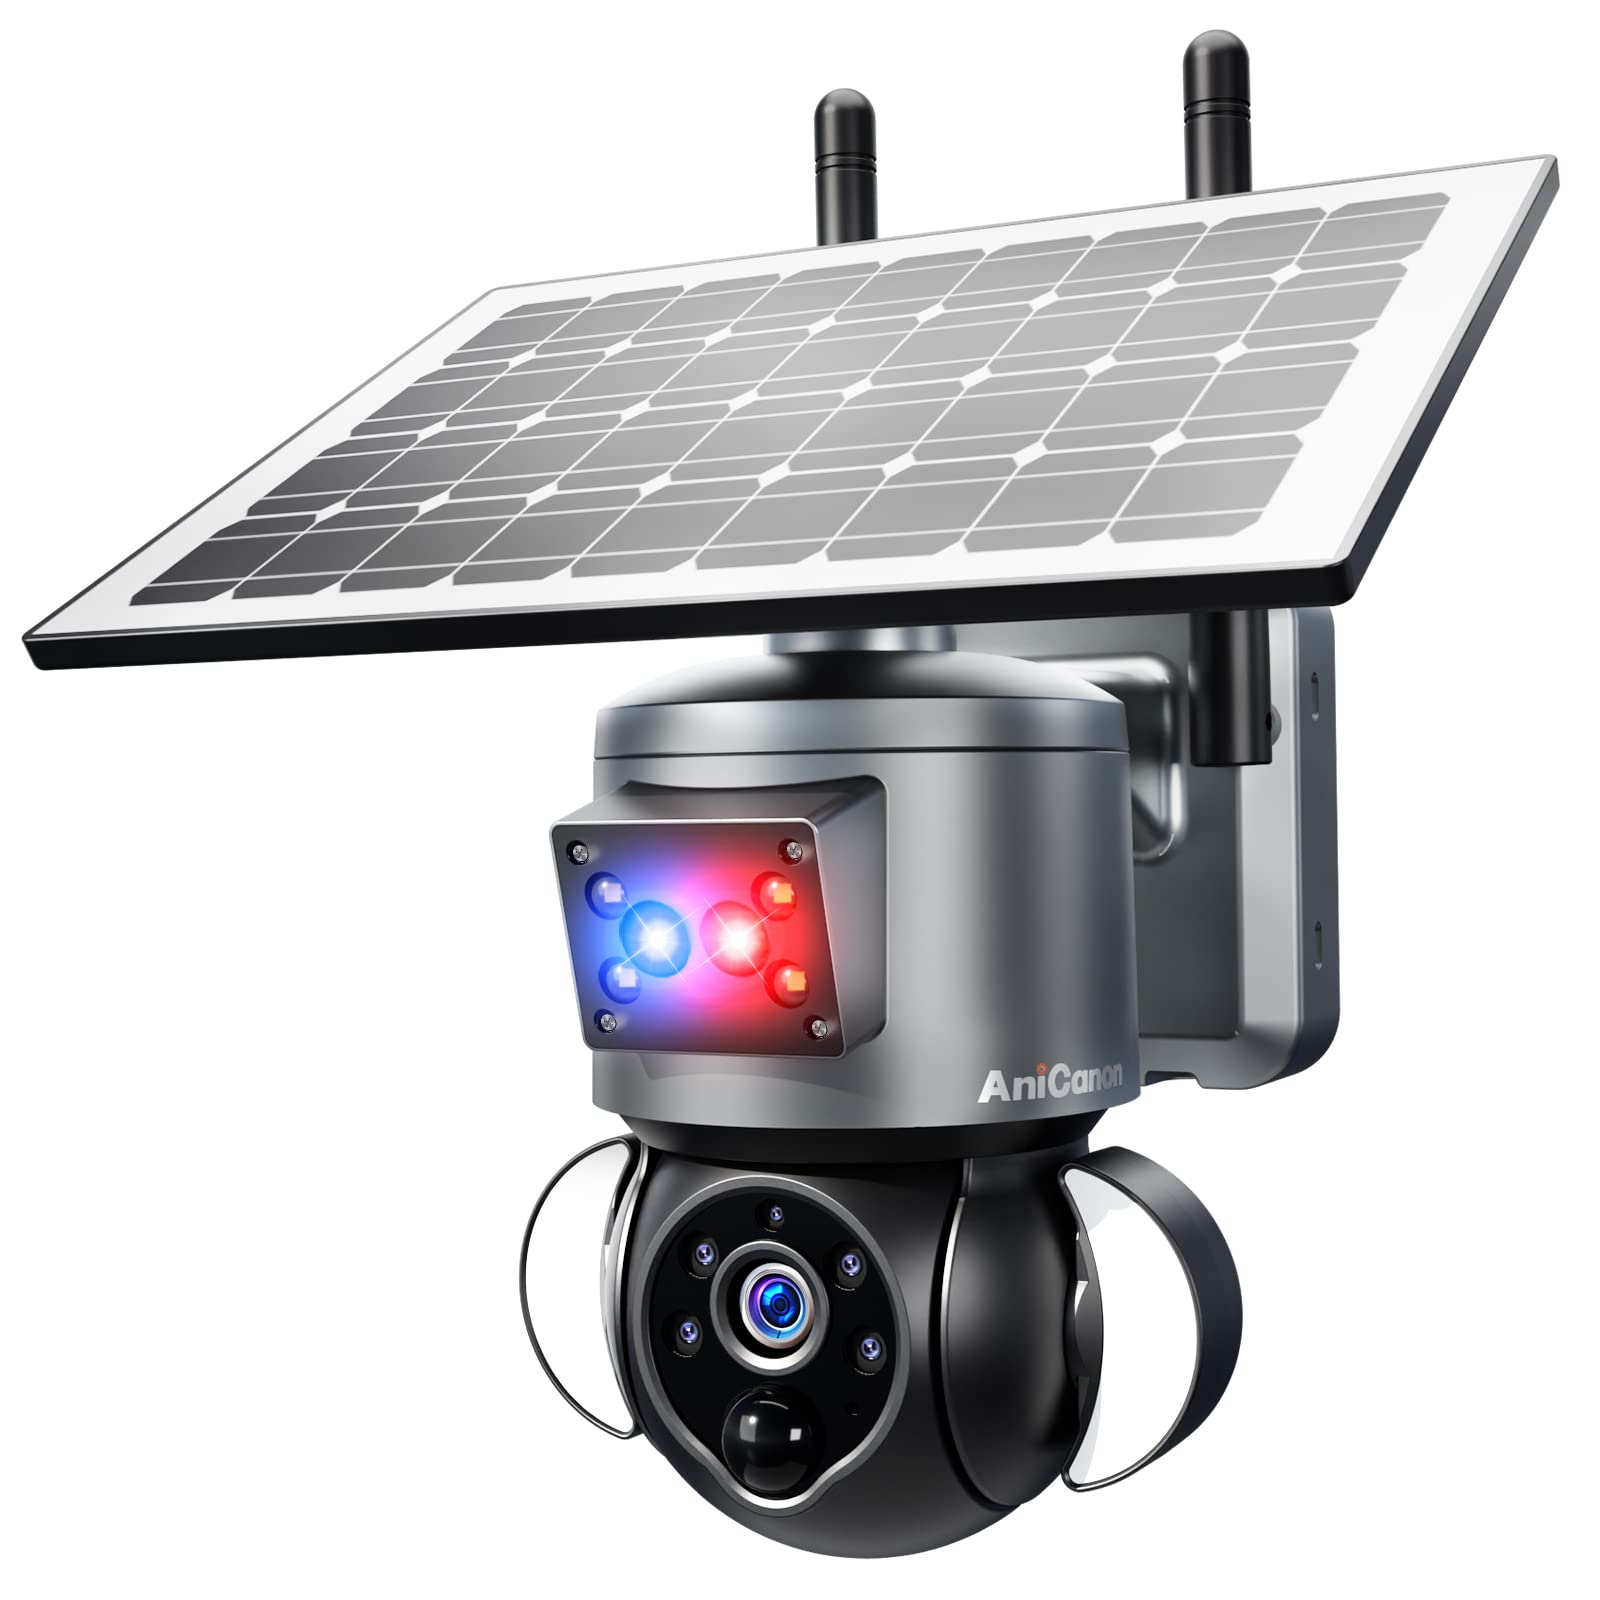 anicanon Solar Security Cameras Wireless OutdoorRemote 2K WiFi 360 View Wireless Solar Powered Cameras for HomePIR Motion